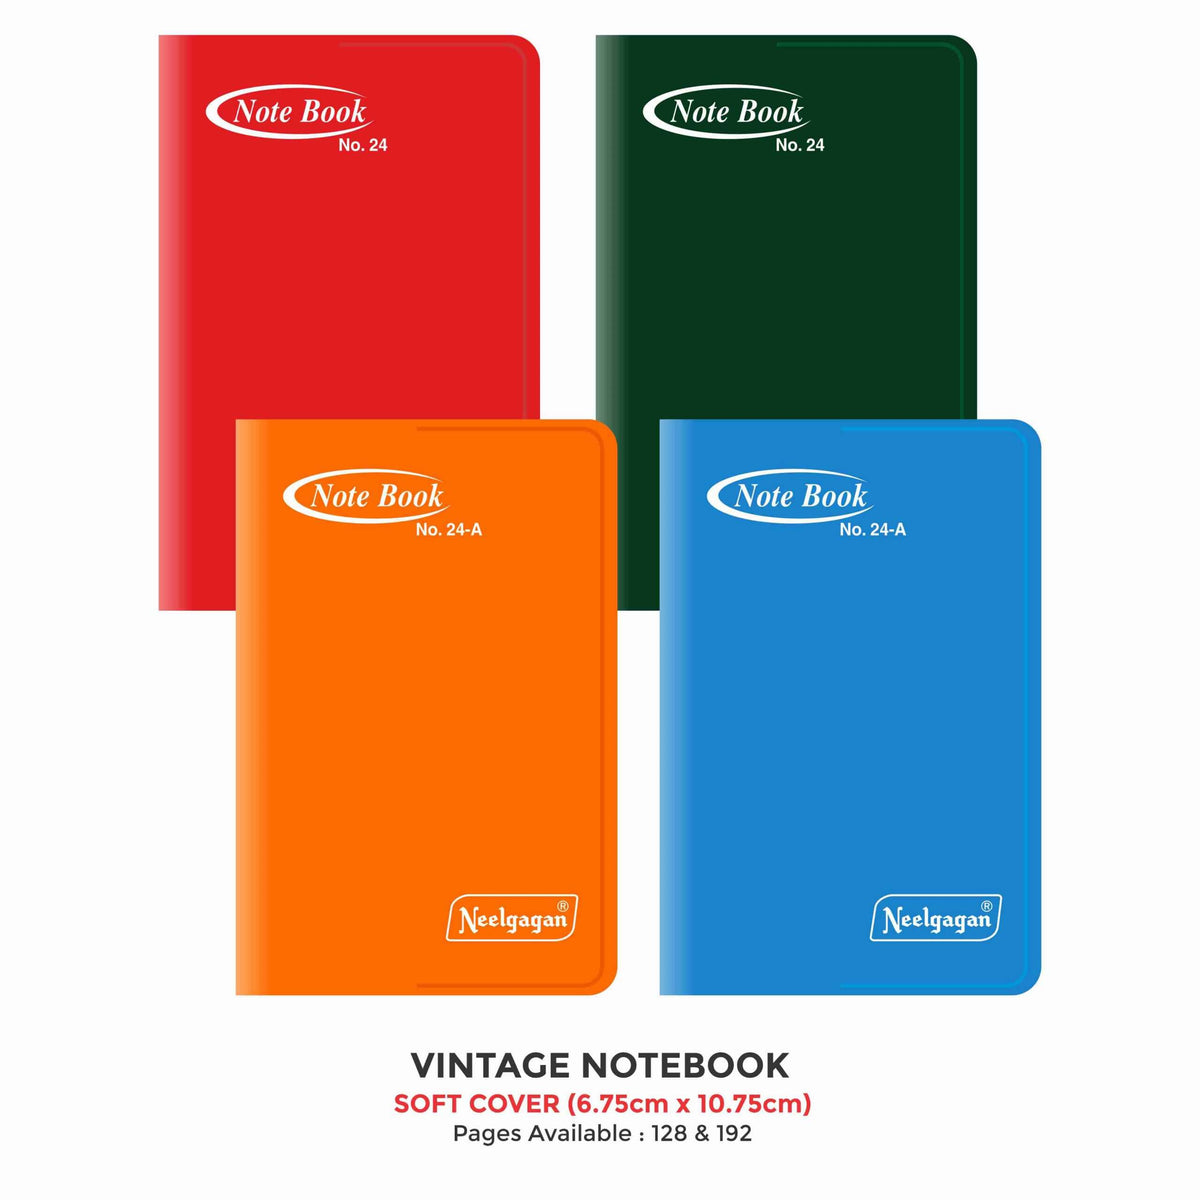 Vintage Notebook, (No. 24 & 24-A), (6.75cm x 10.75cm) Soft Cover Plastic